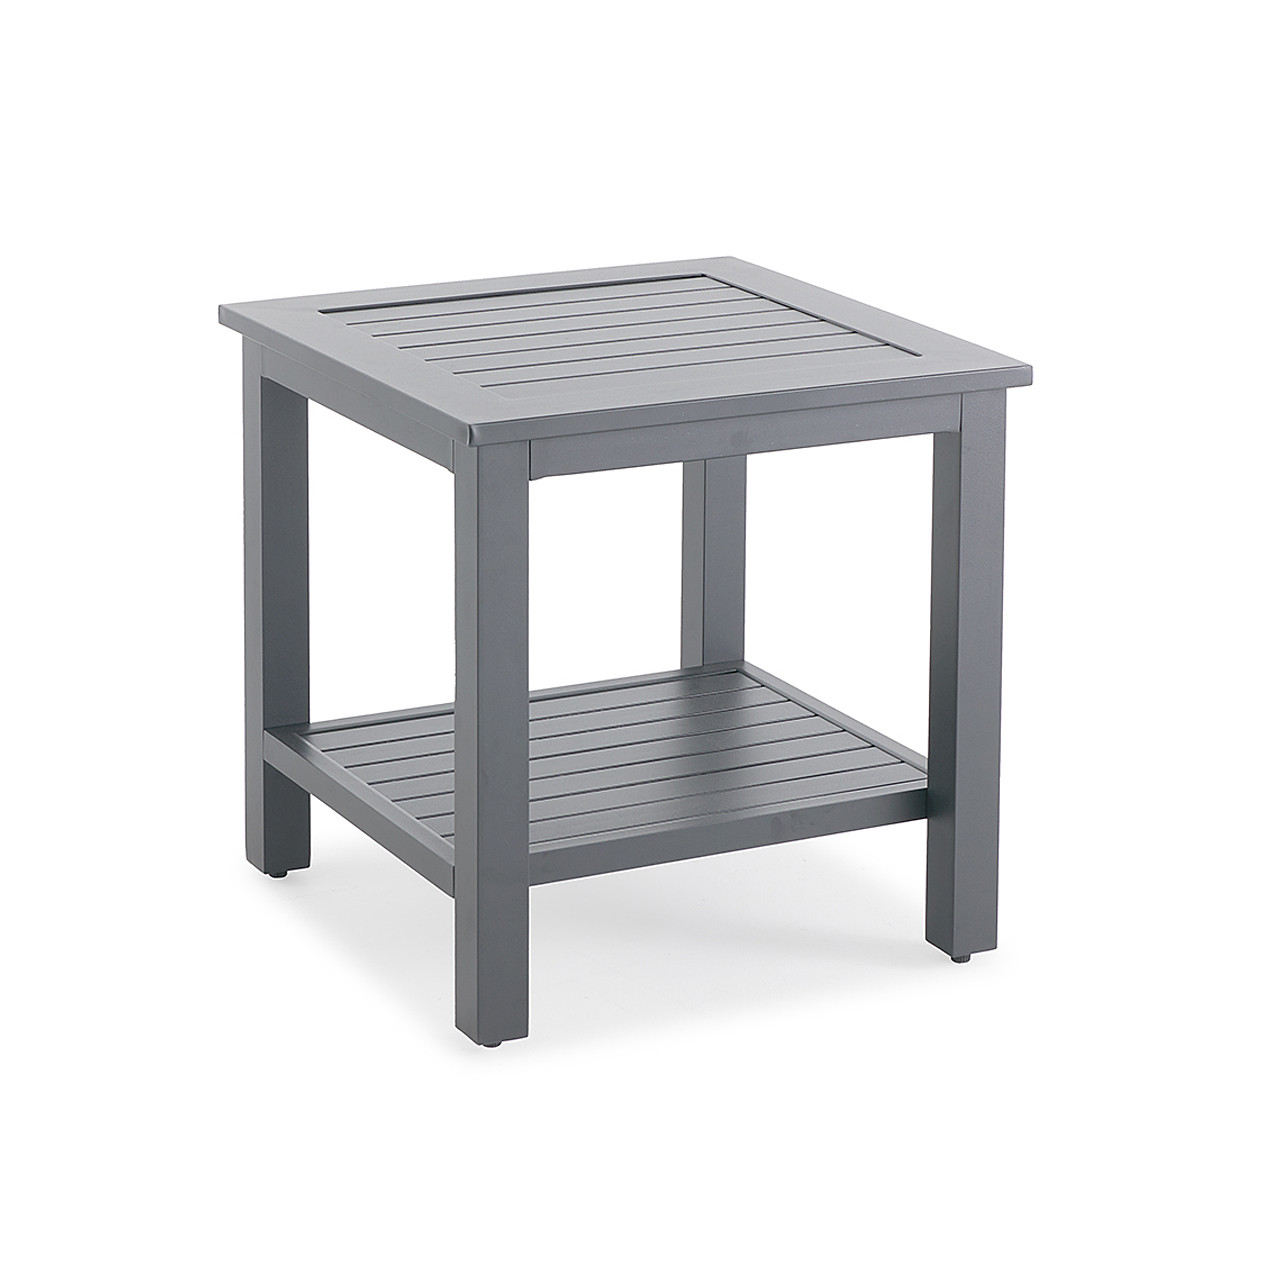 Soho Slate Grey Aluminum 22 in. Sq. Slat Top End Table